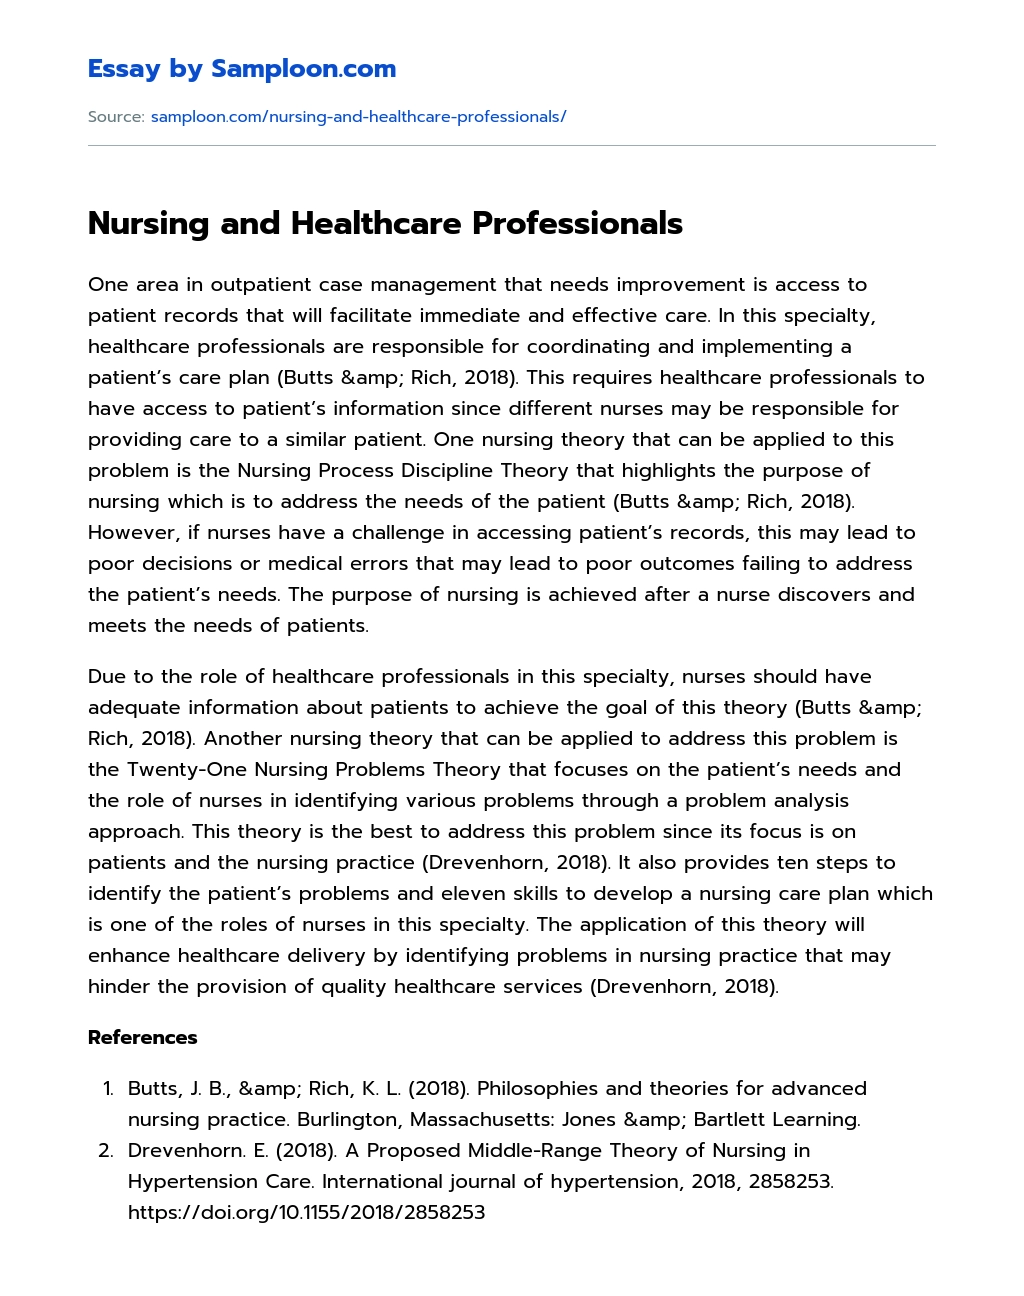 Nursing and Healthcare Professionals essay